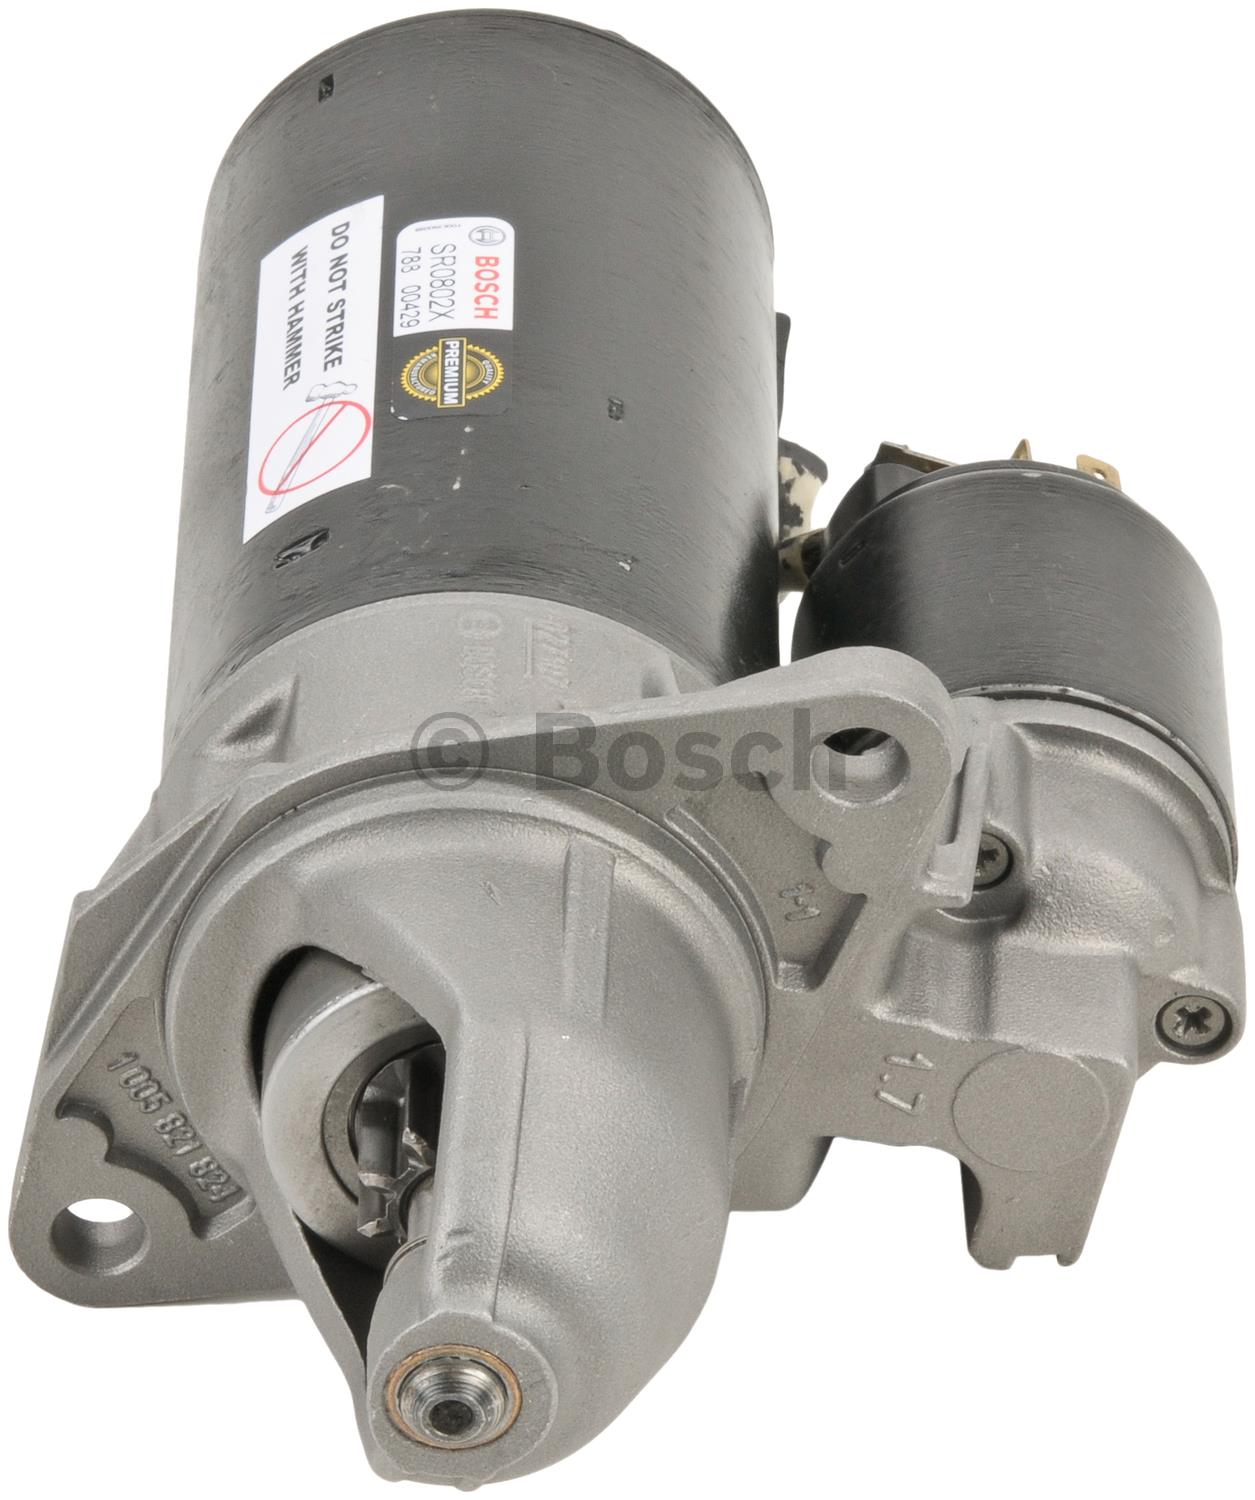 Picture of Bosch SR0460X RE STARTER